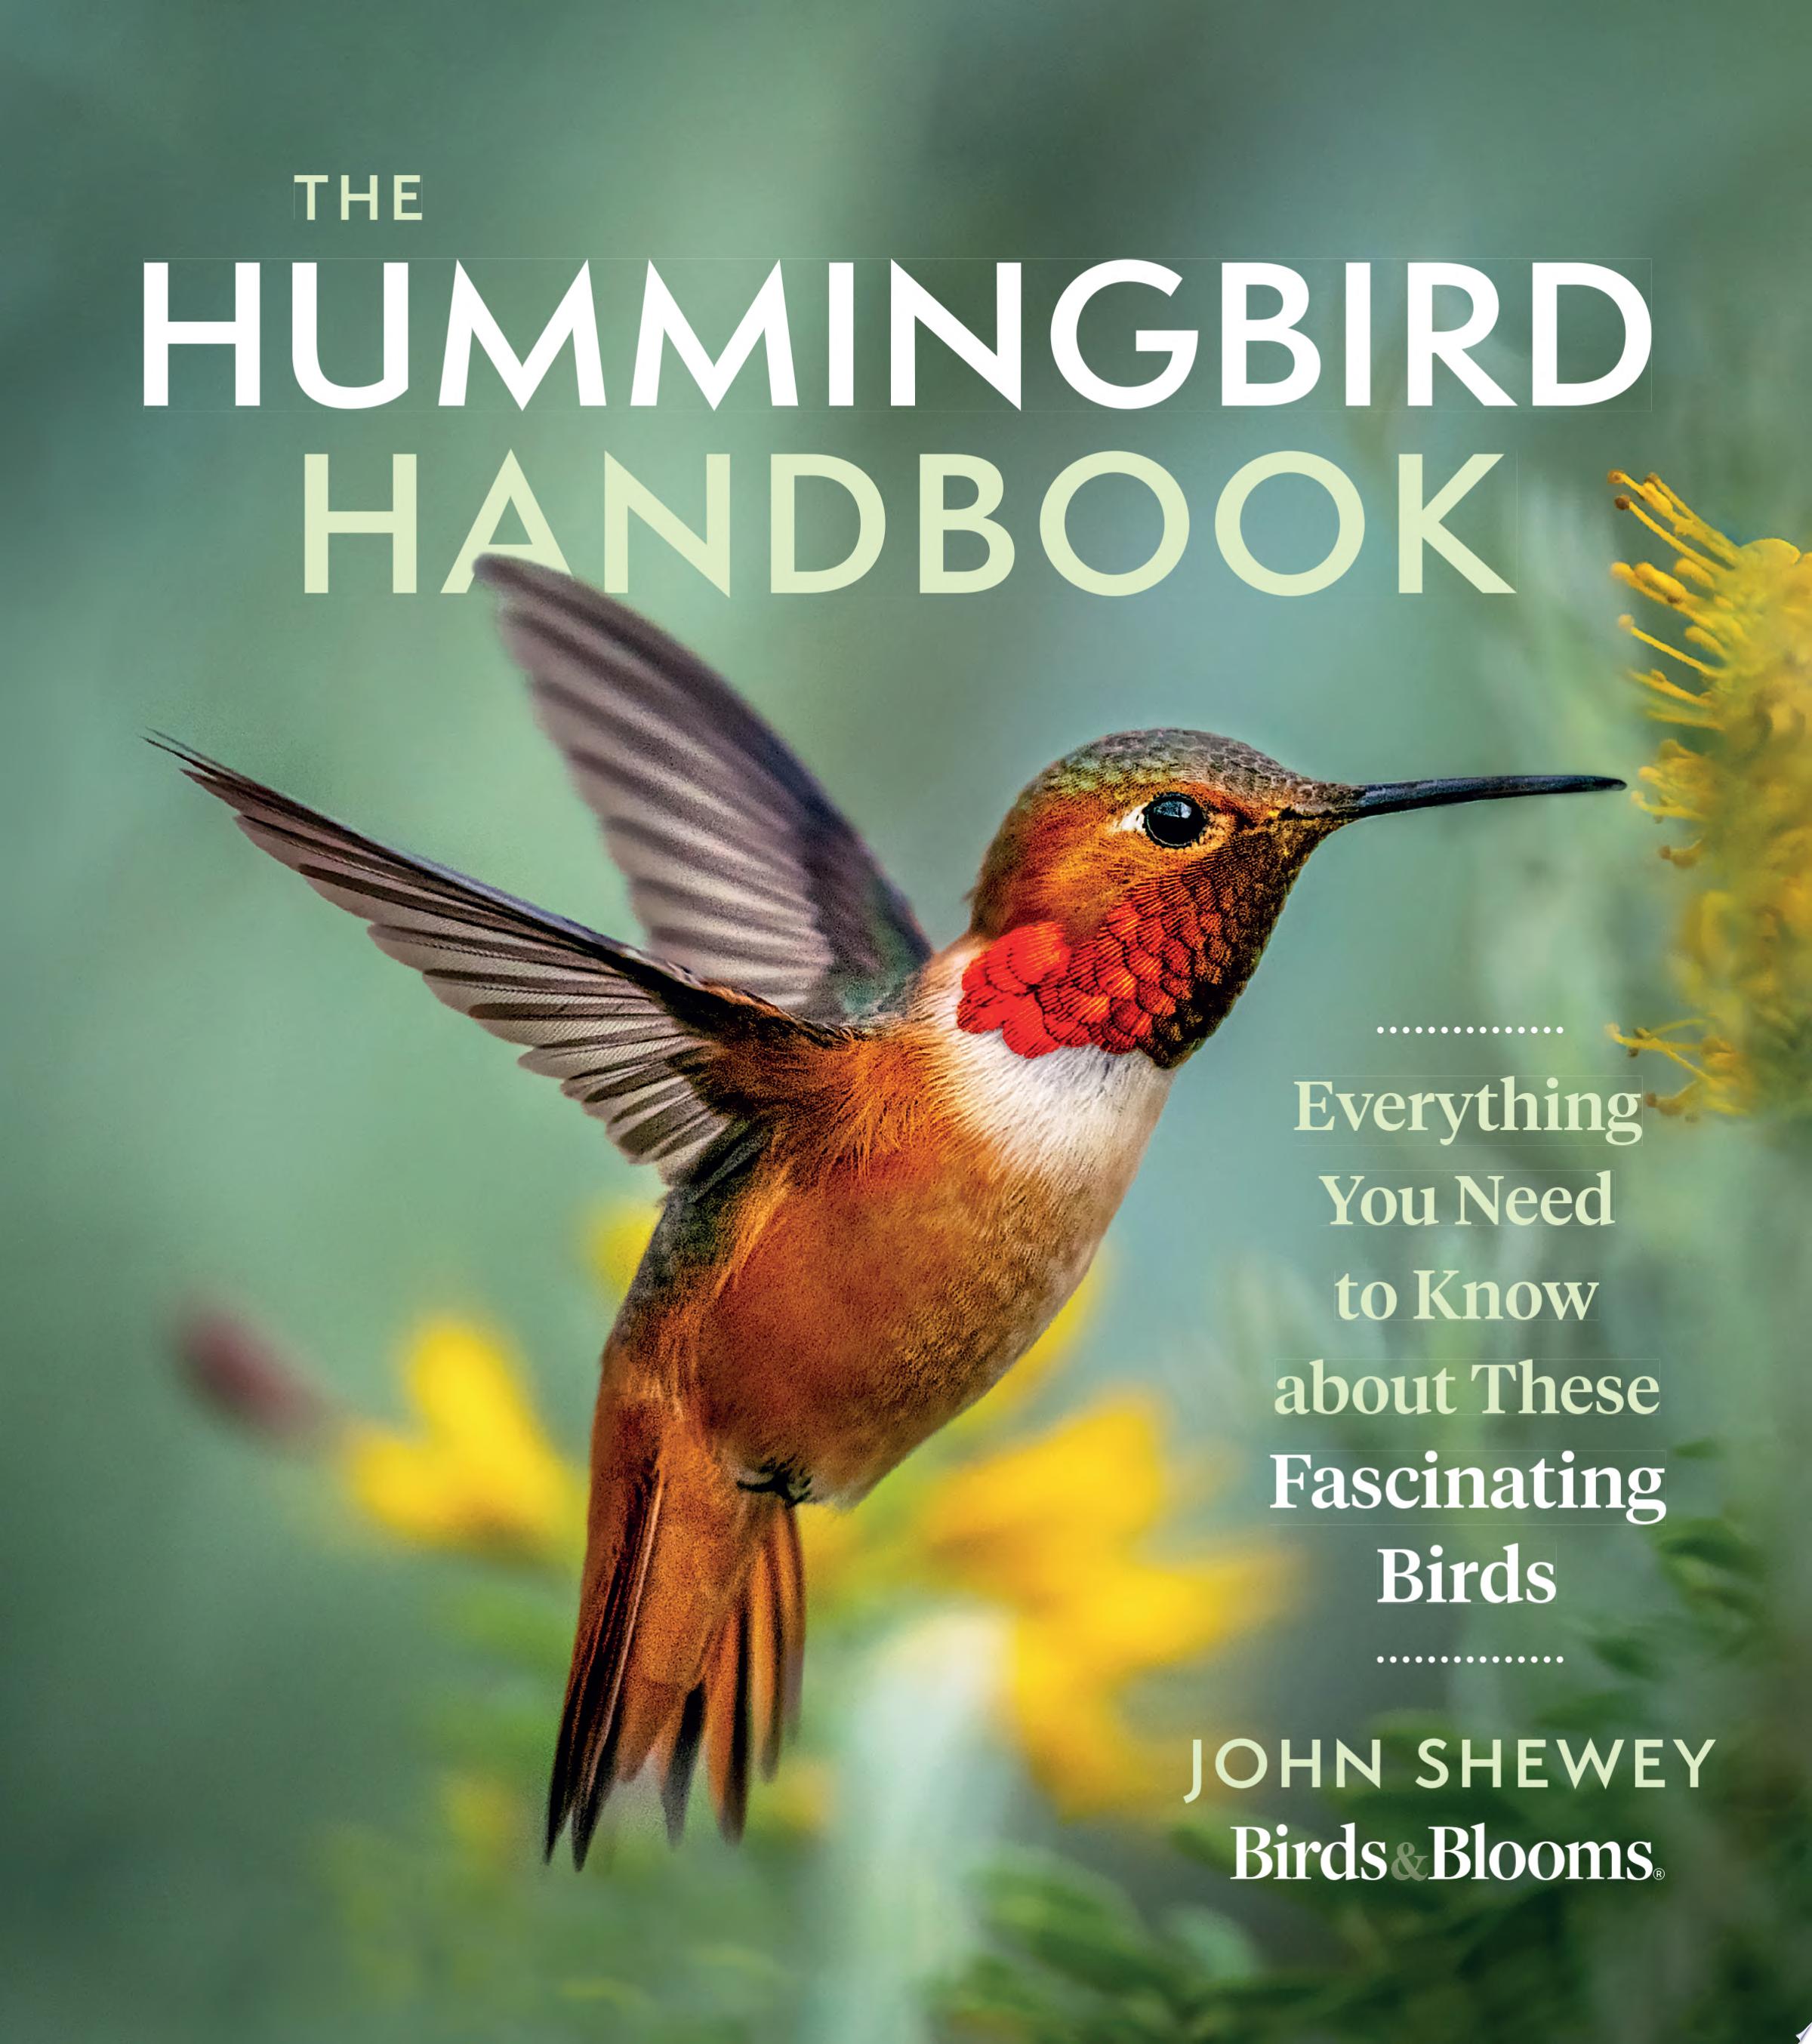 Image for "The Hummingbird Handbook"